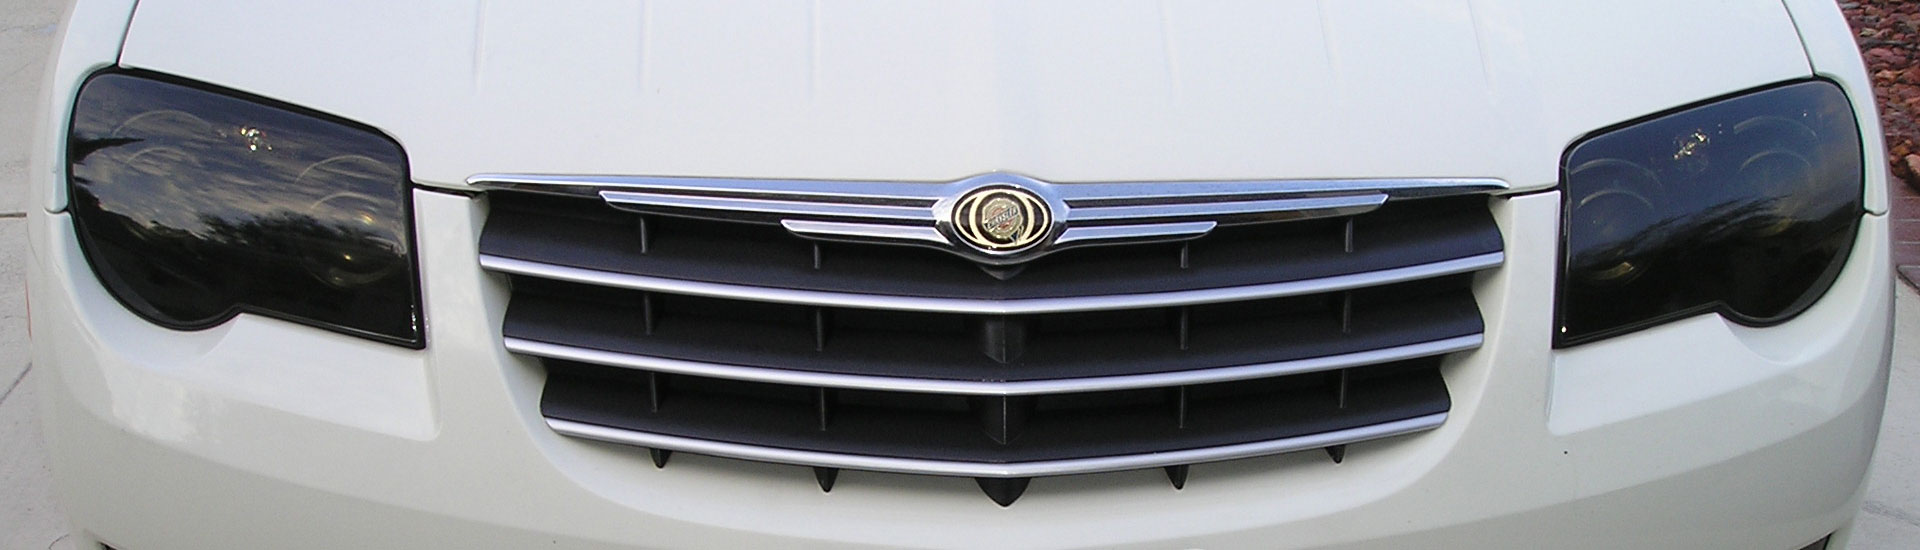 Chrysler Headlight Tint Covers